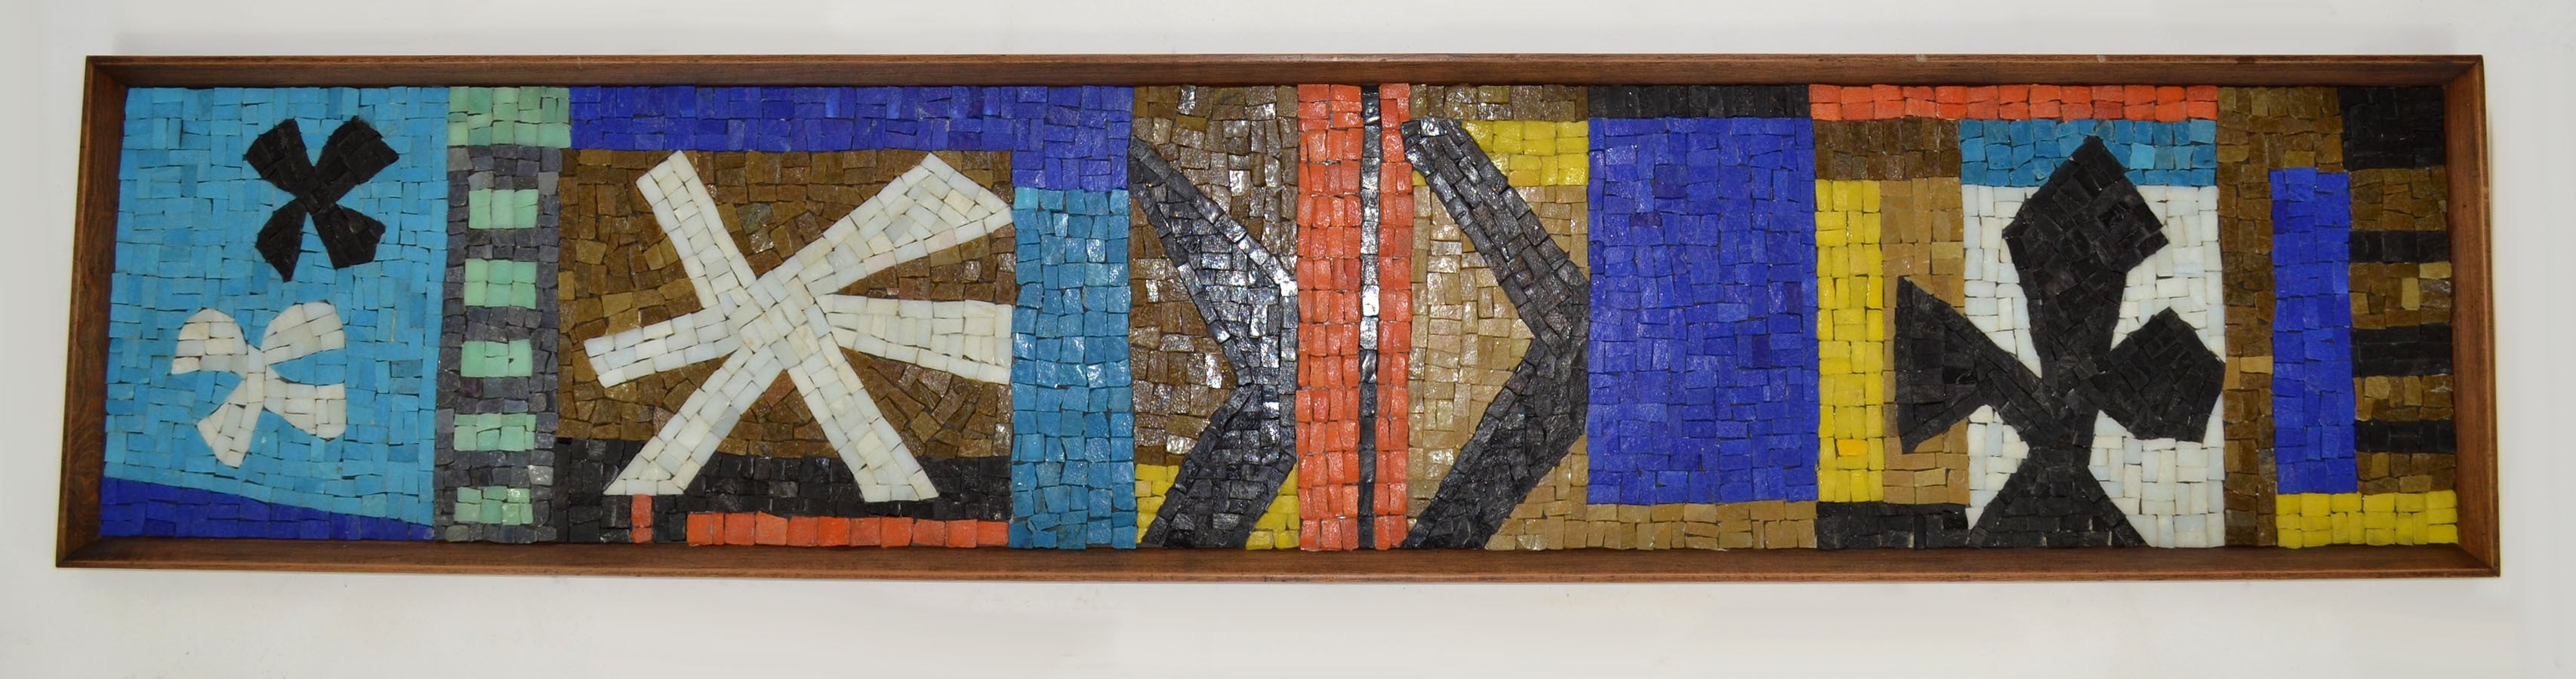 Framed Tile Mosaic by Evelyn Ackerman